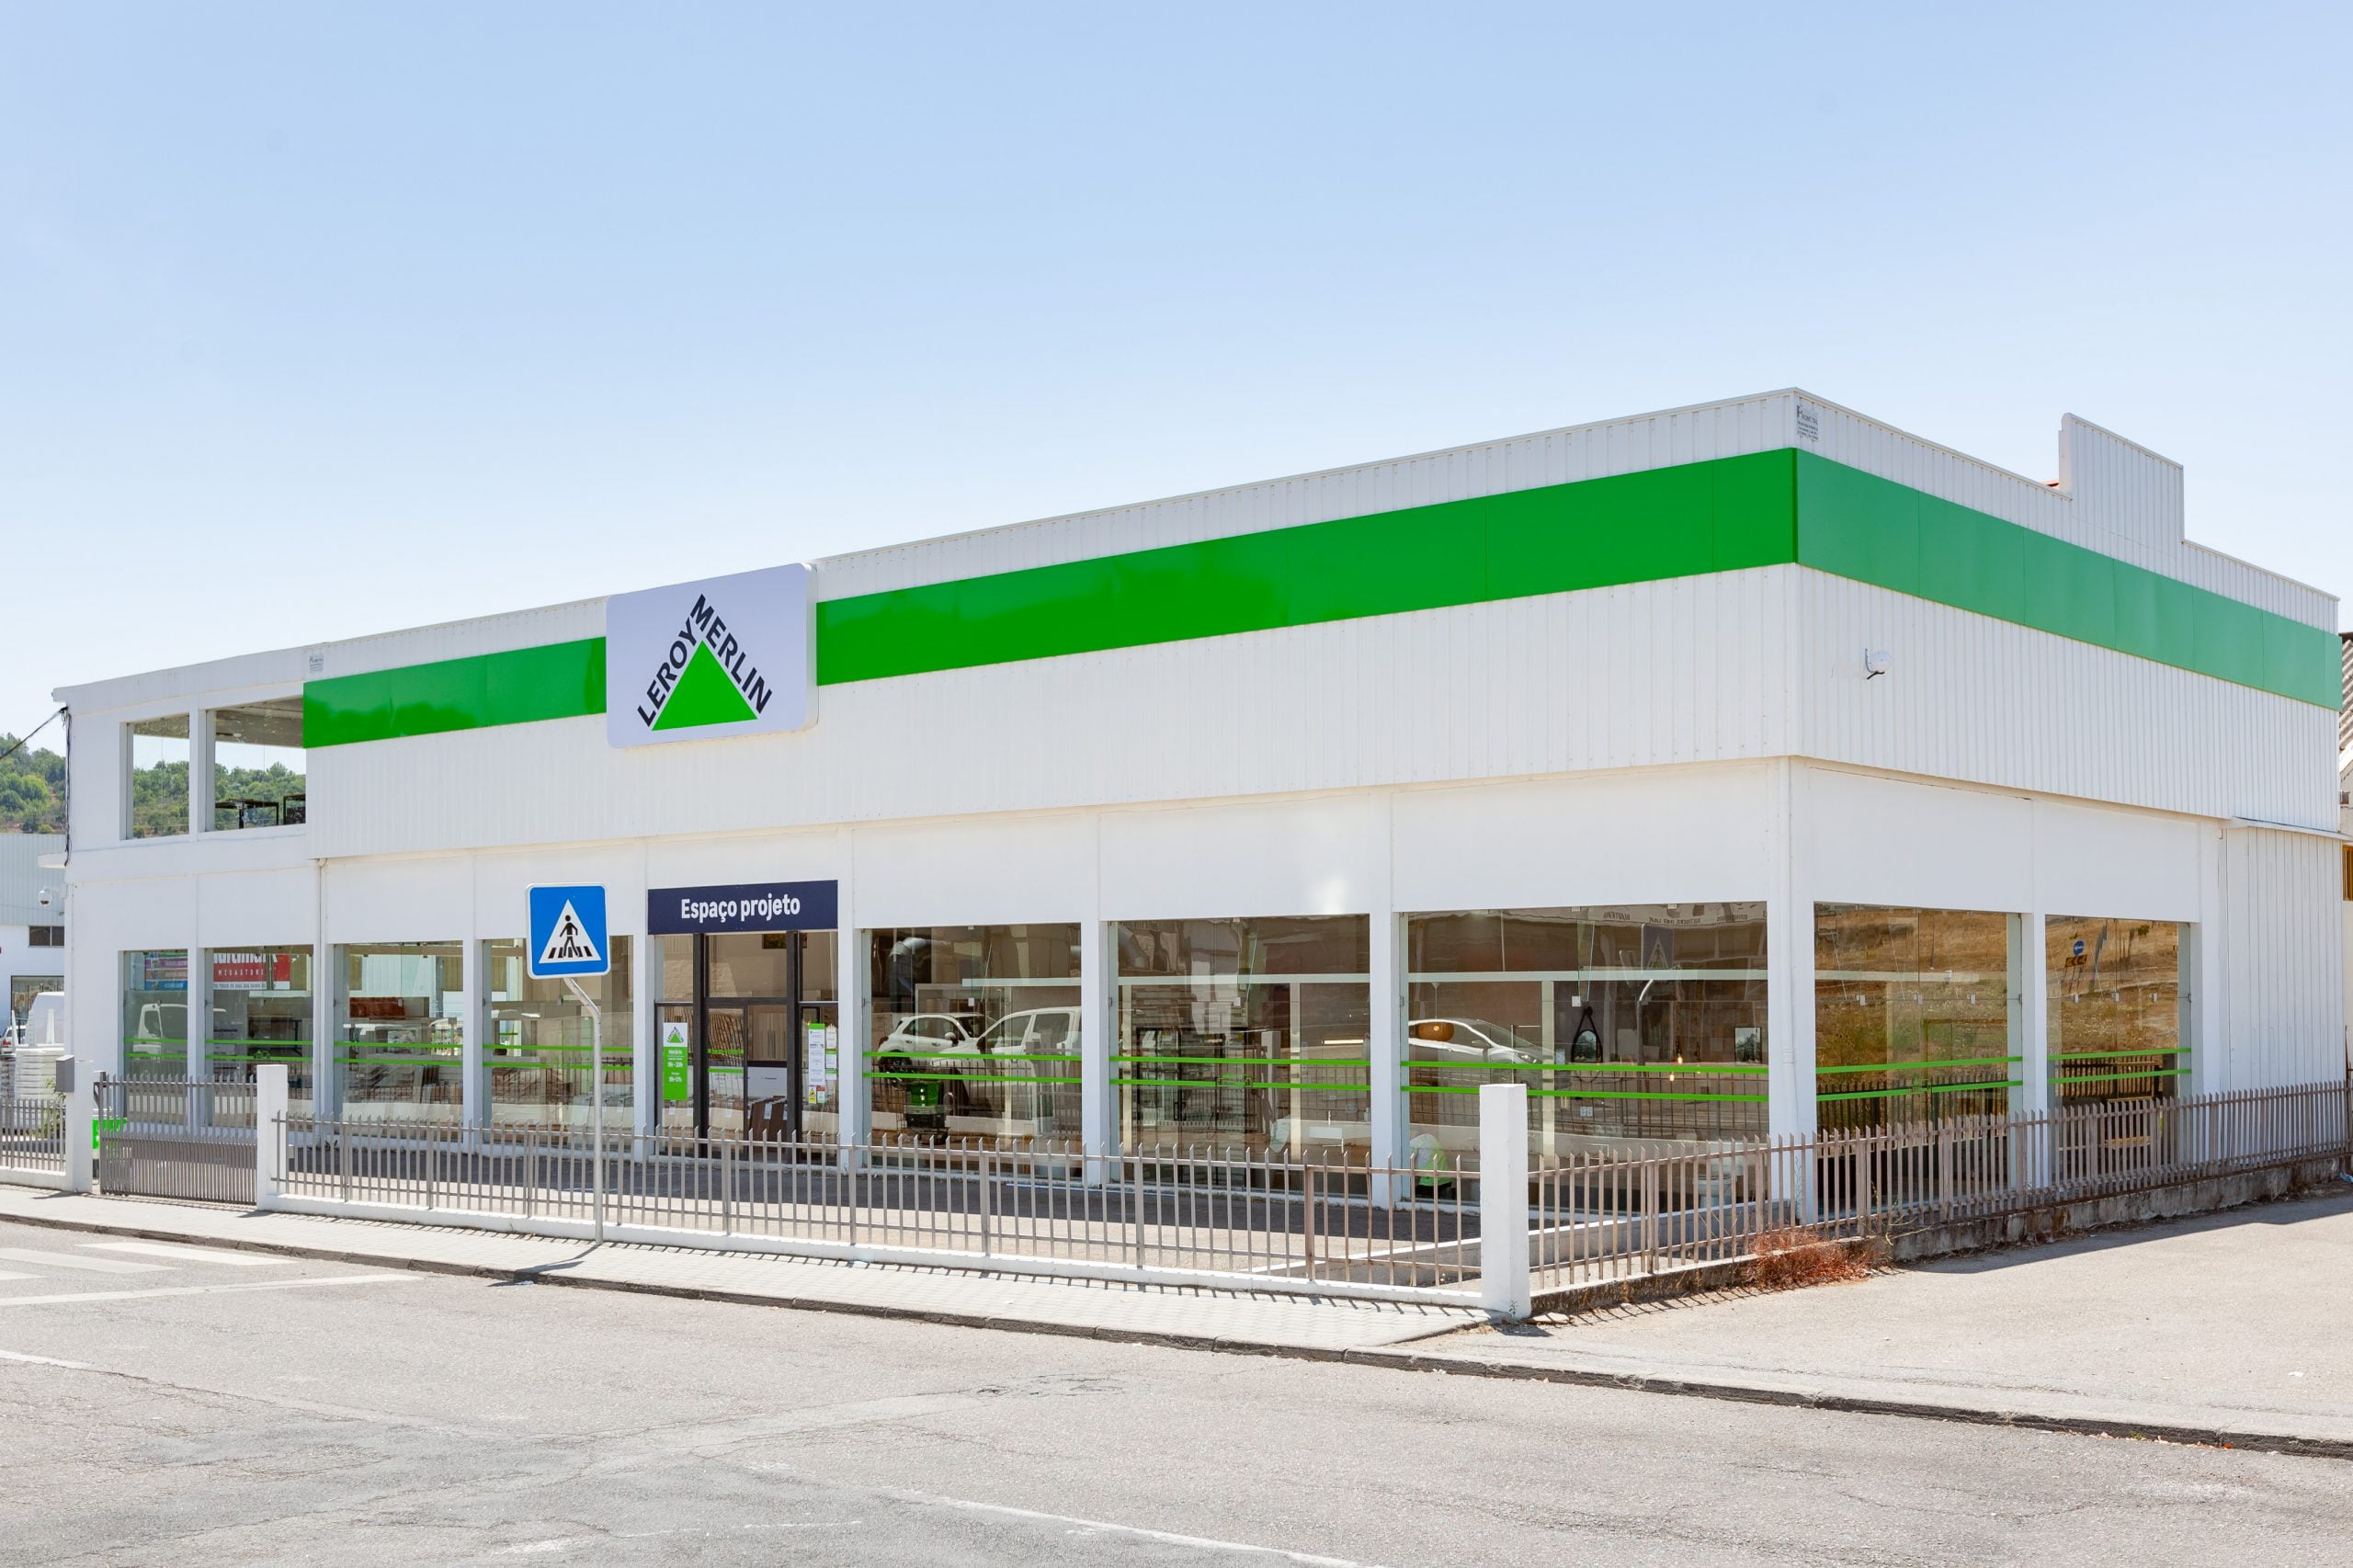 Leroy Merlin inaugura nova loja em Bragança - Grande Consumo